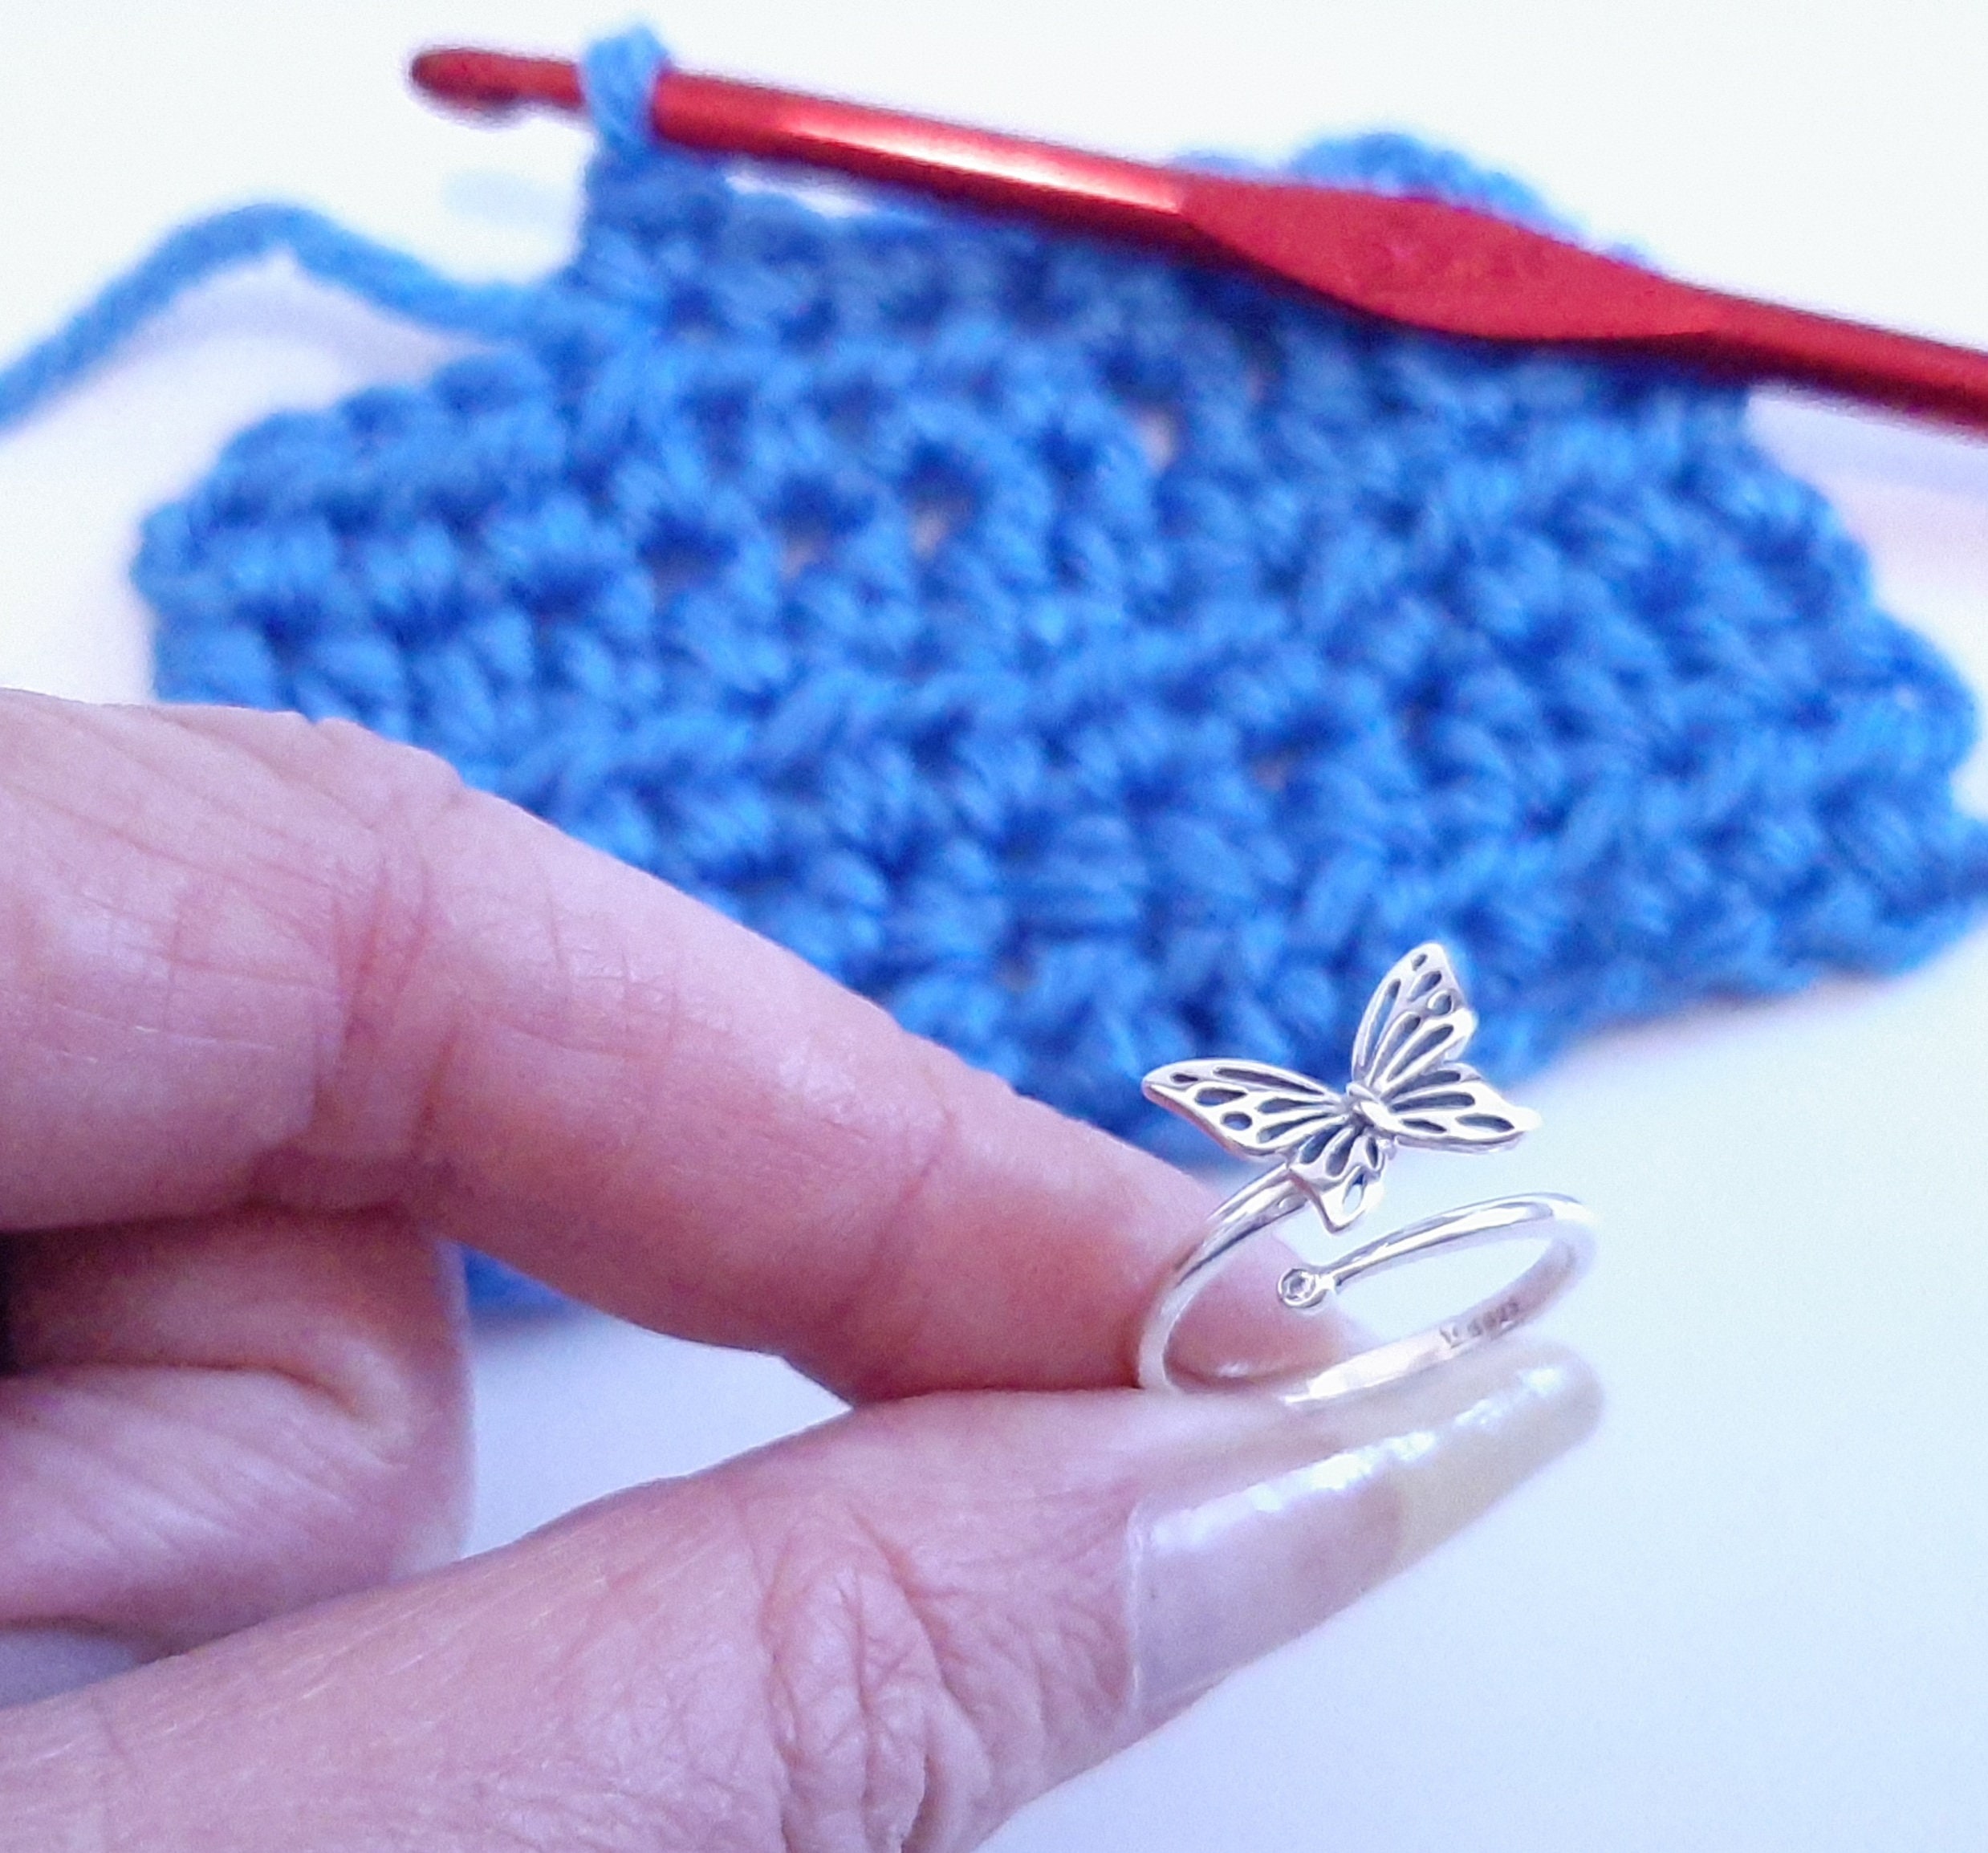 Crochet Tension Yarn Guide Rings, Hot or Not? (SOLVED) – Littlejohn's Yarn